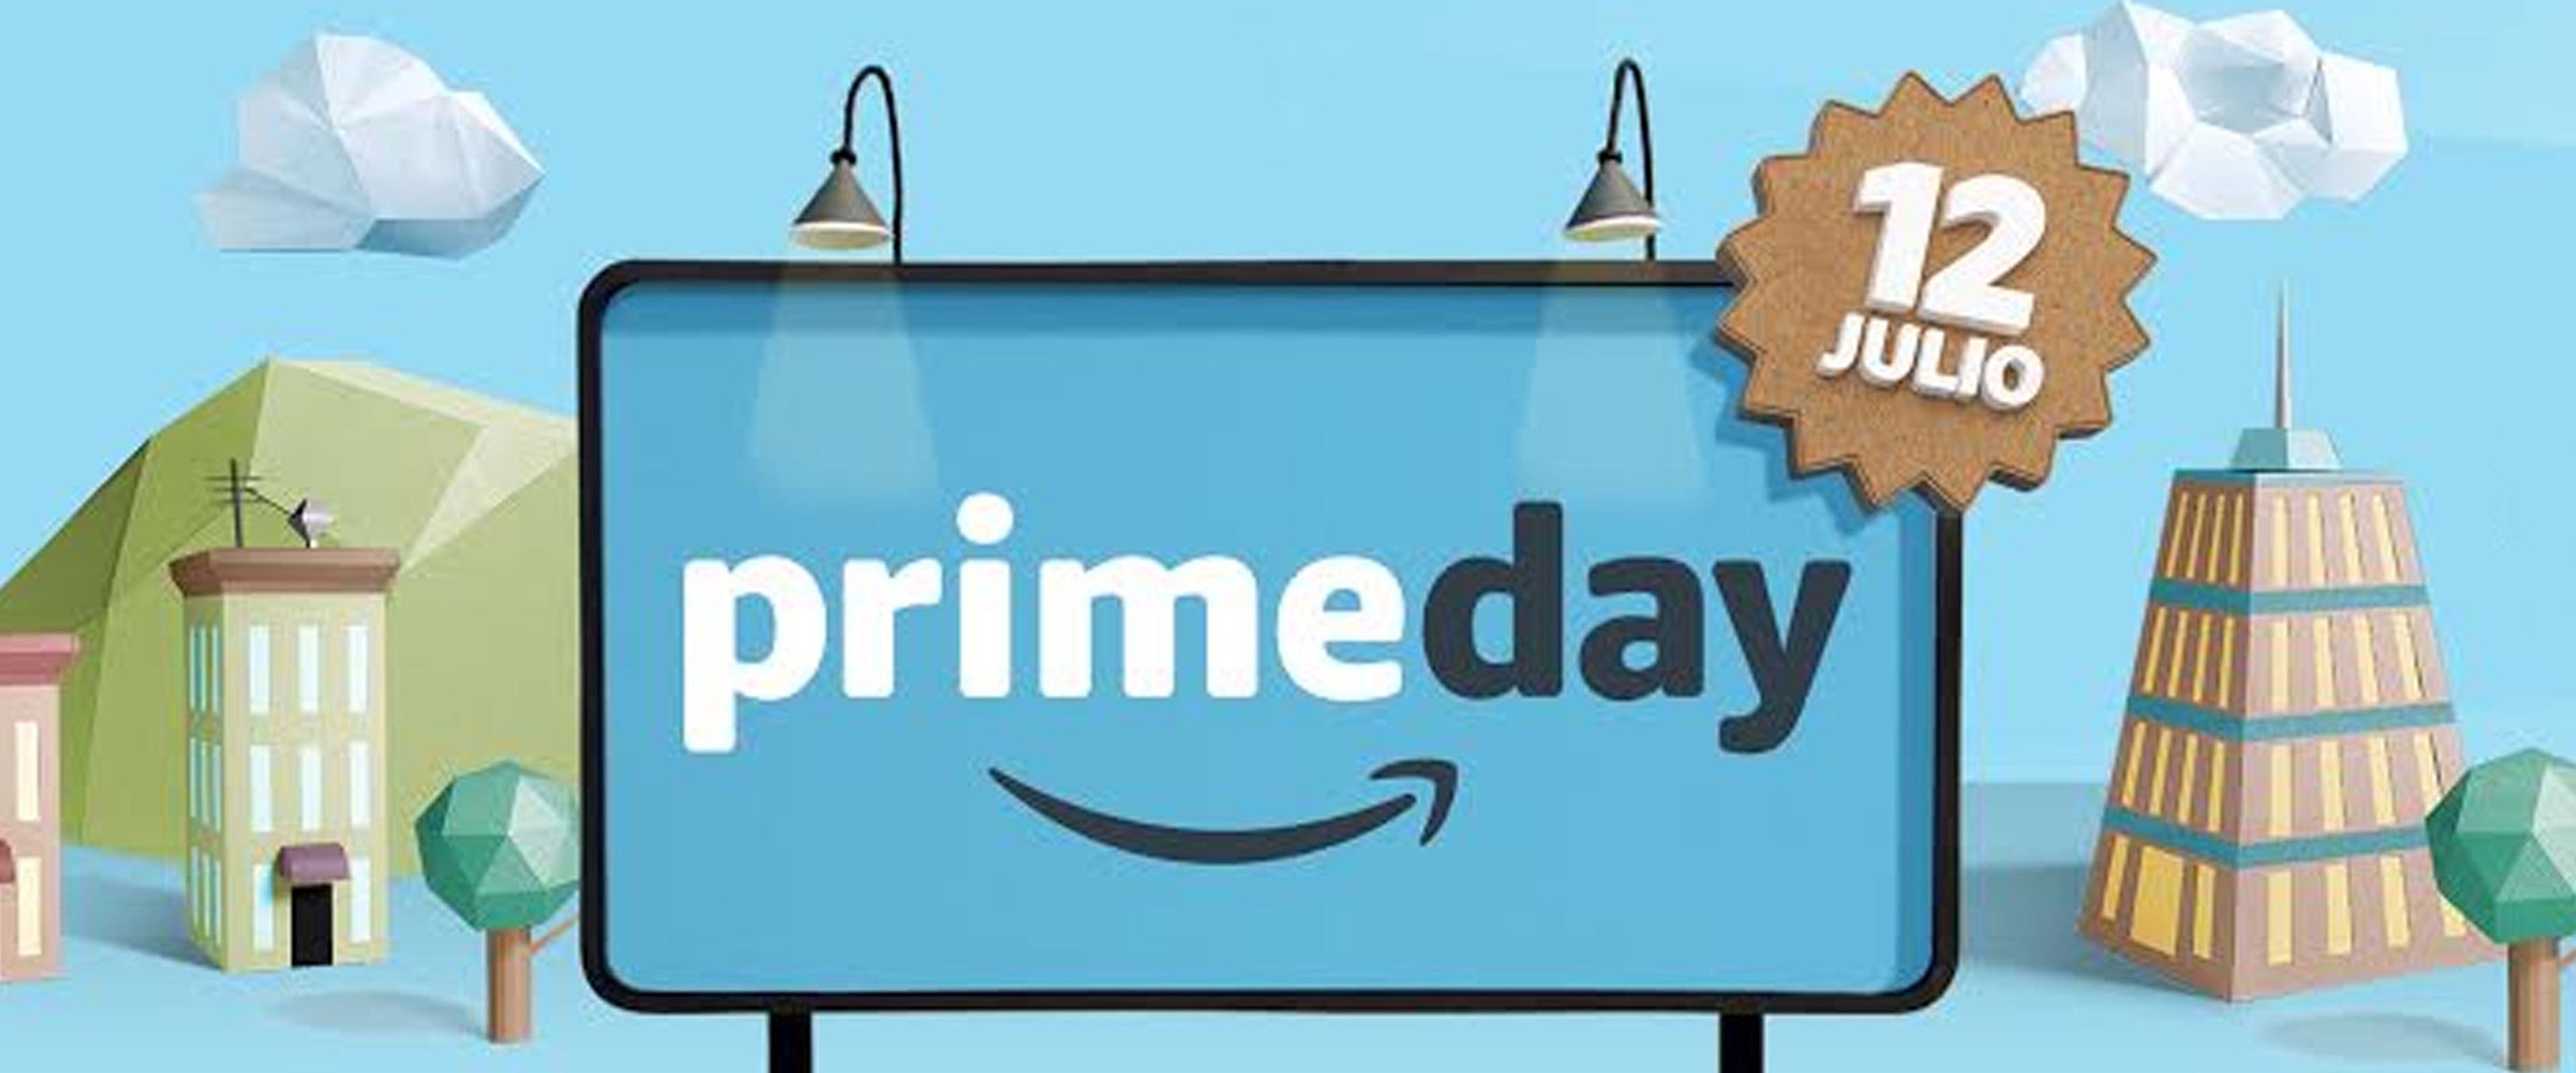 Prime Day de Amazon 2016